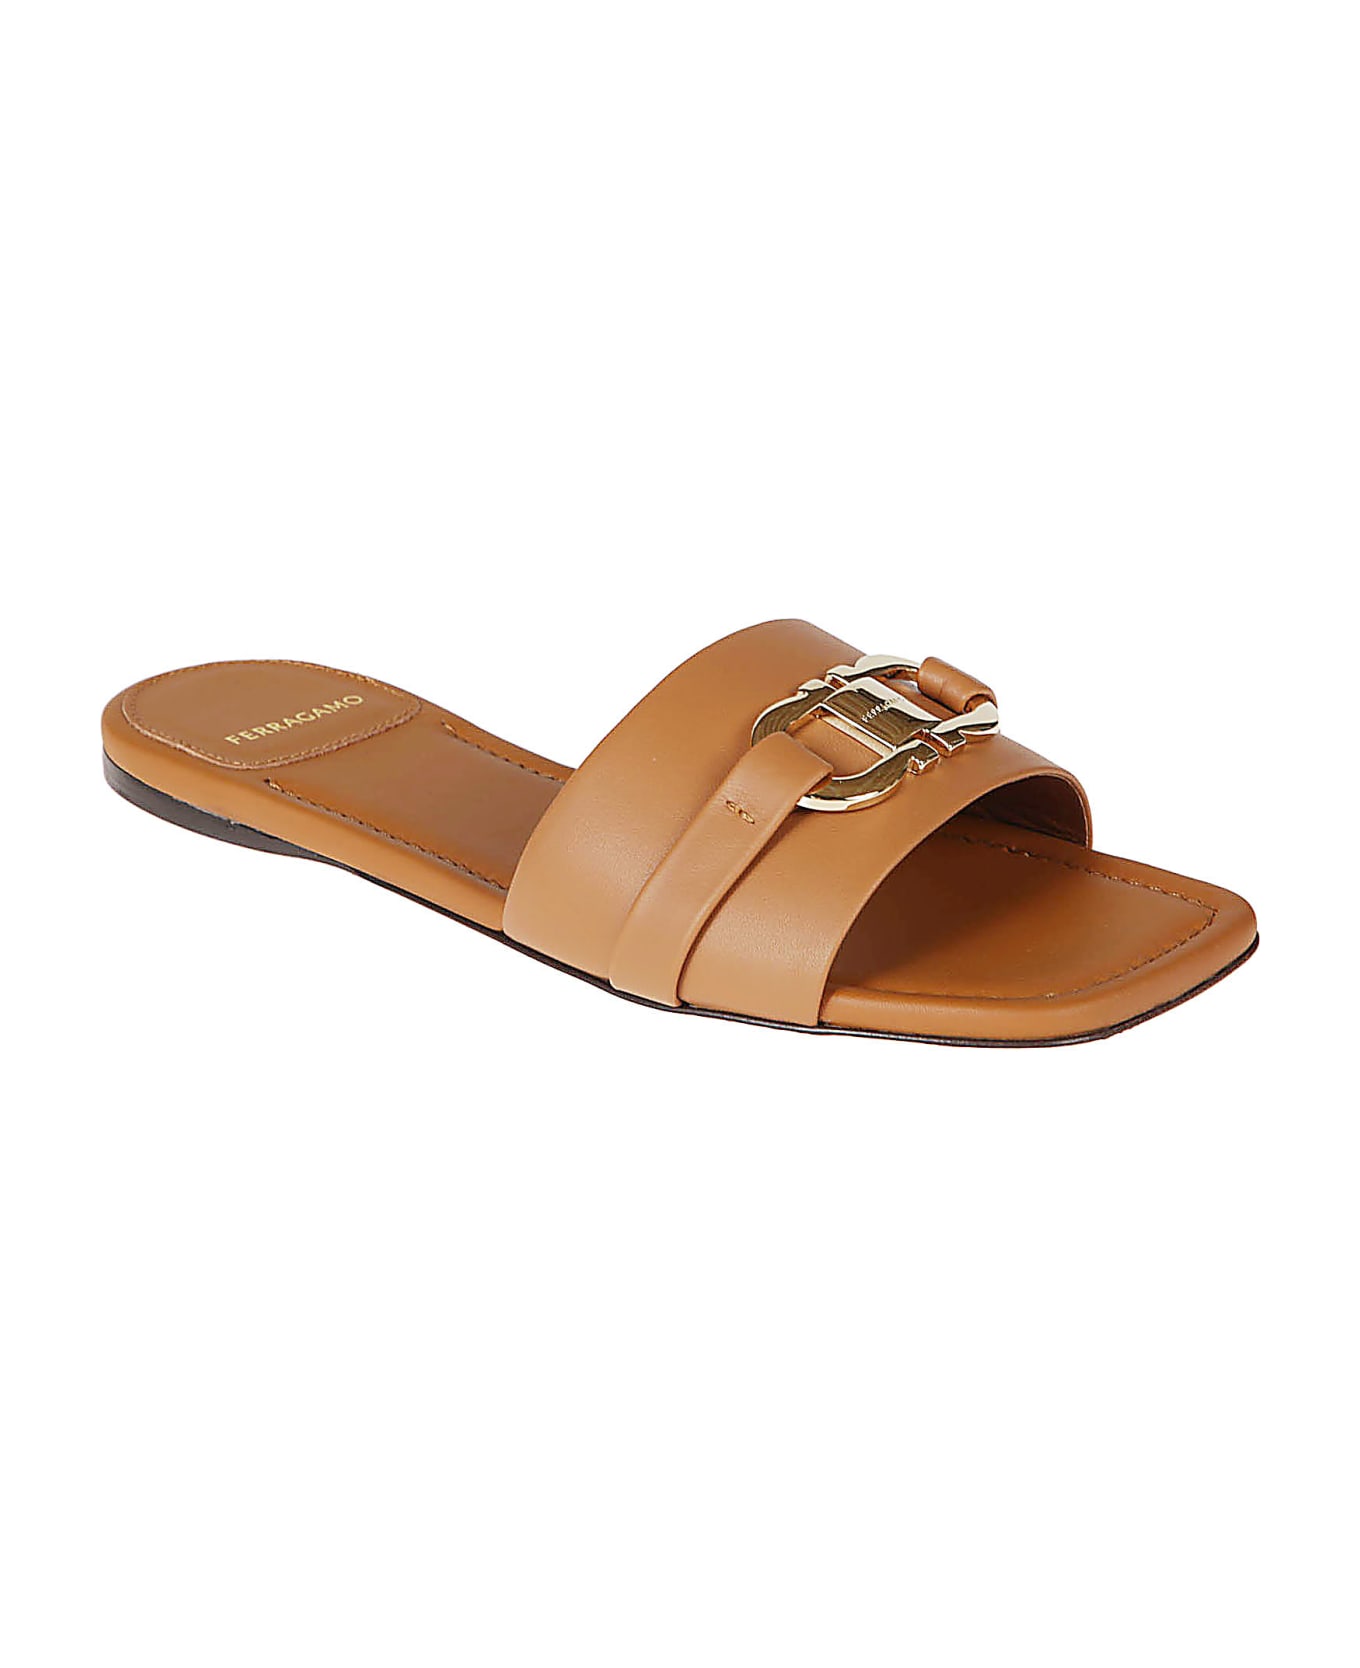 Ferragamo Leah Flat Sandals - Cuoio サンダル